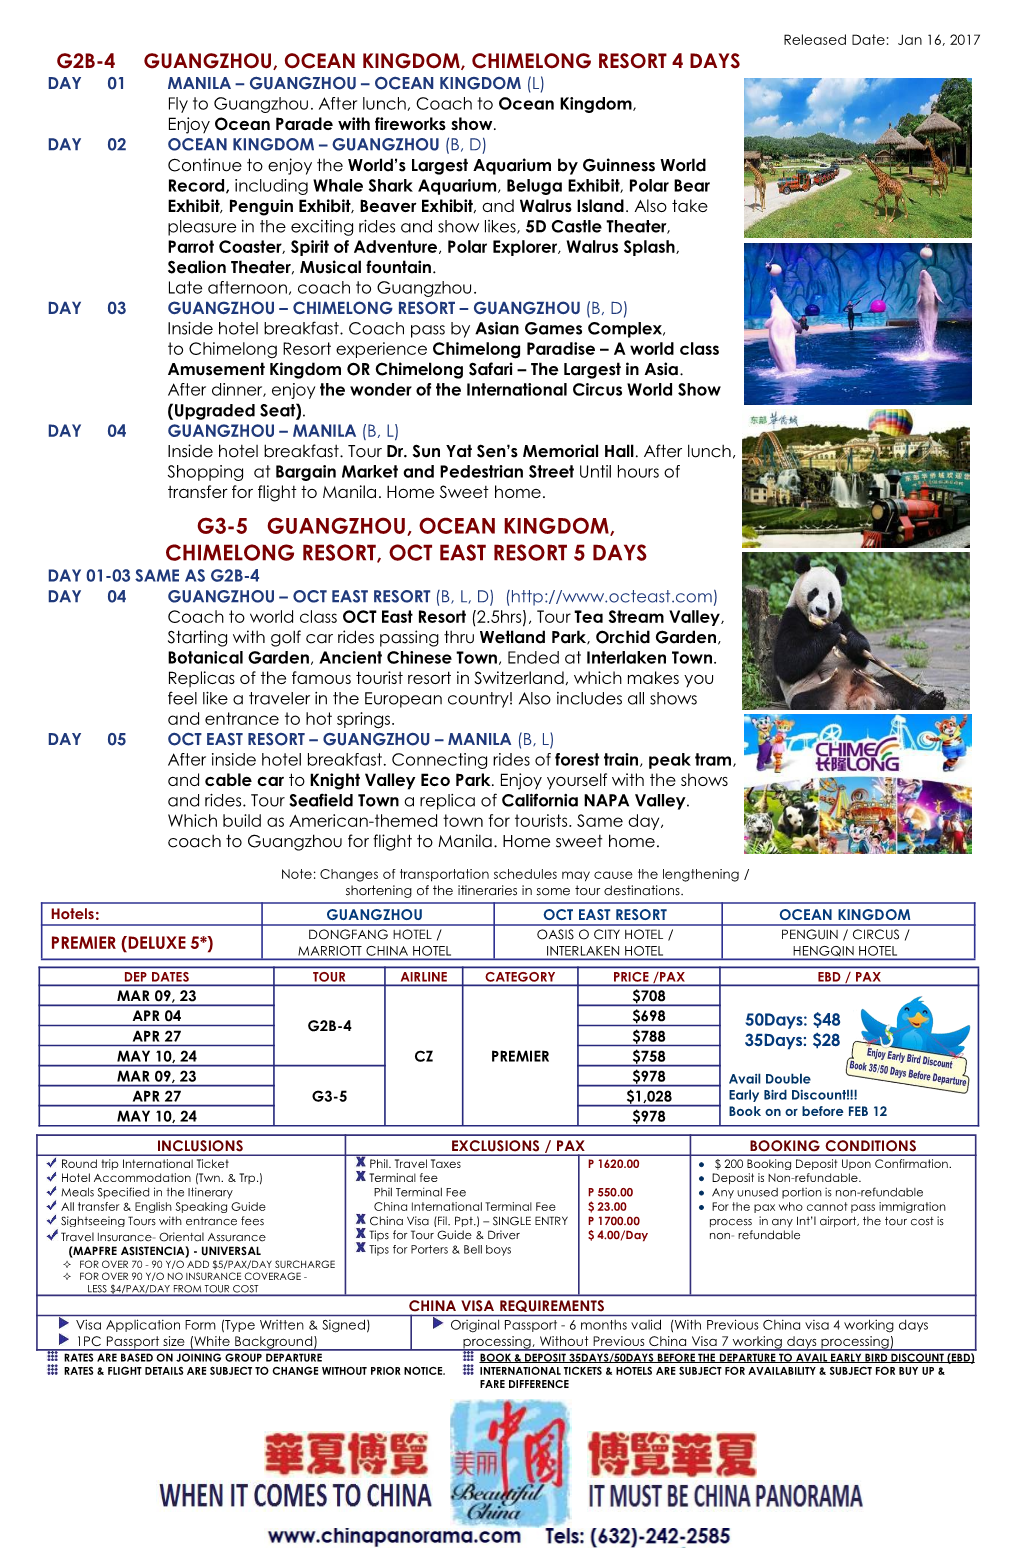 G3-5 Guangzhou, Ocean Kingdom, Chimelong Resort